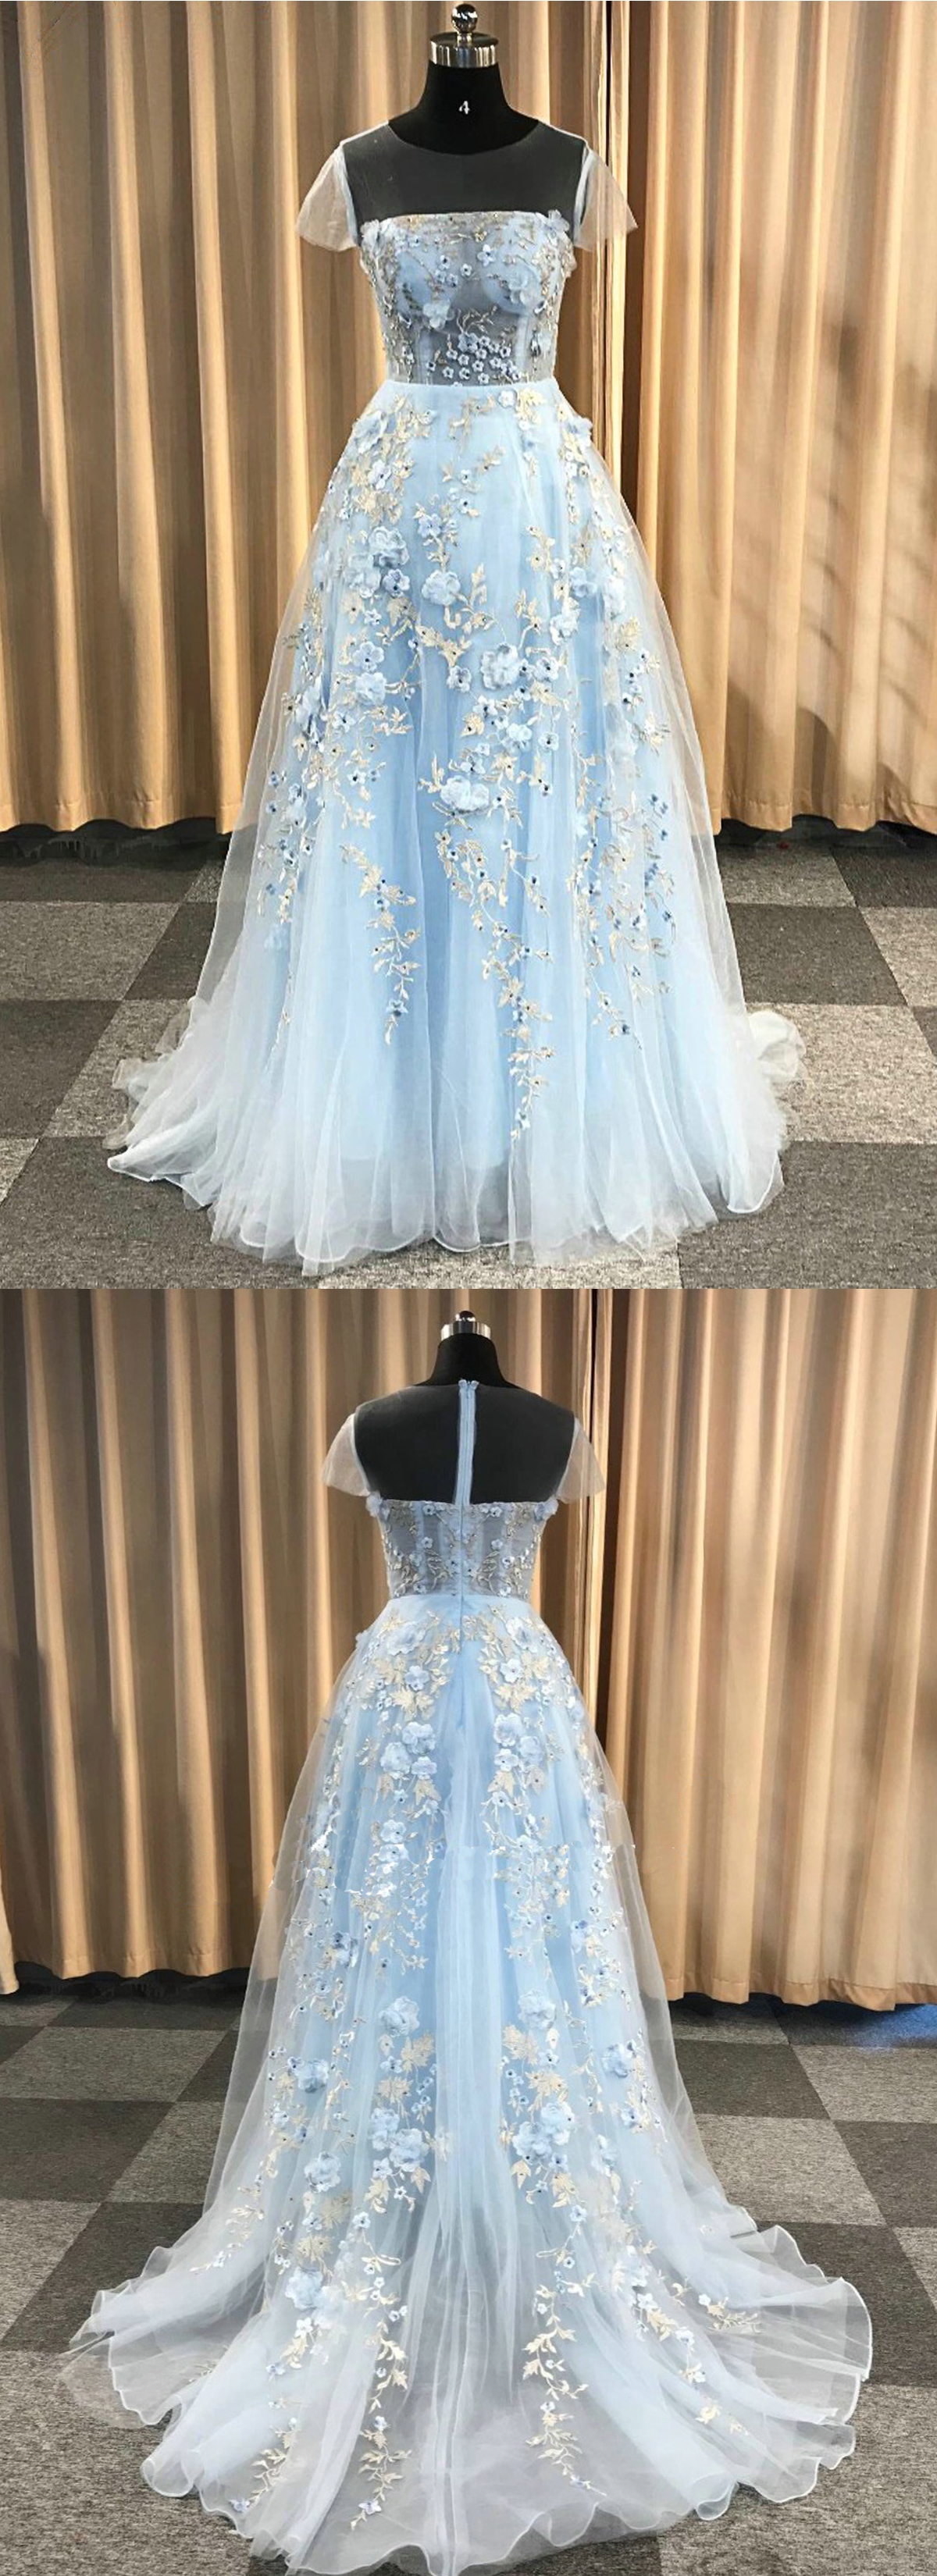 Light Blue Flower Lace Short Sleeve Long Pageant Prom Dress,pl0928